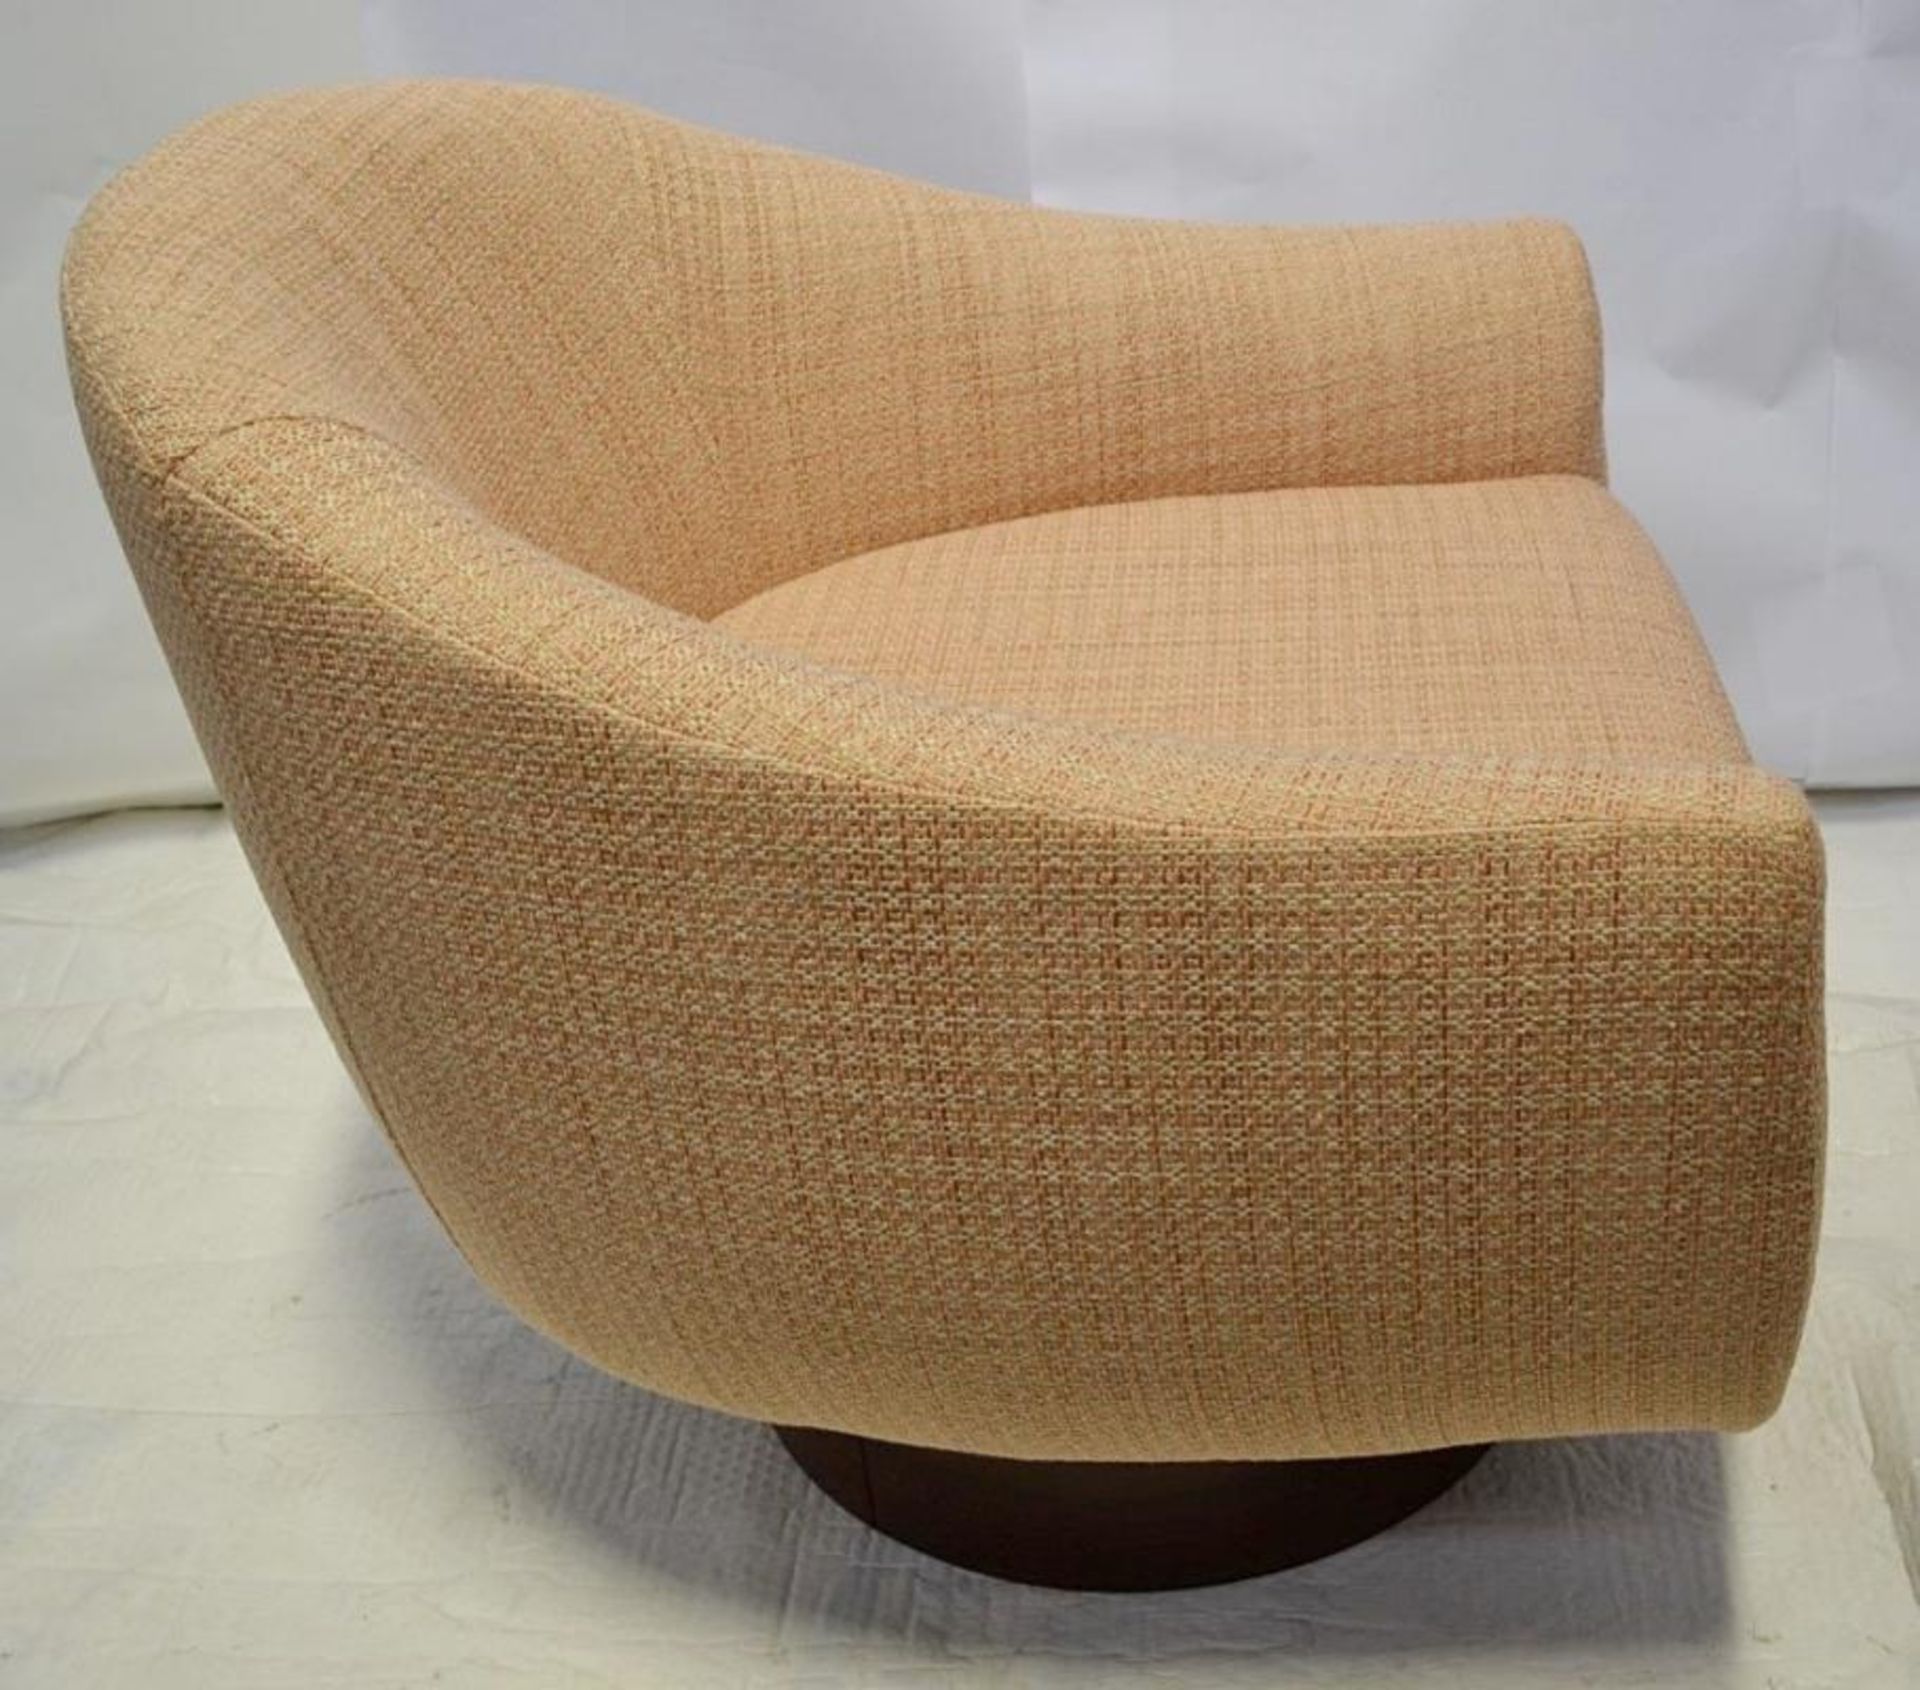 1 x KELLY WEARSTLER Sonara Swivel Chair Rosewood - Dimensions: 31” W x 35” D x 31” H - Ex-Display In - Image 15 of 28